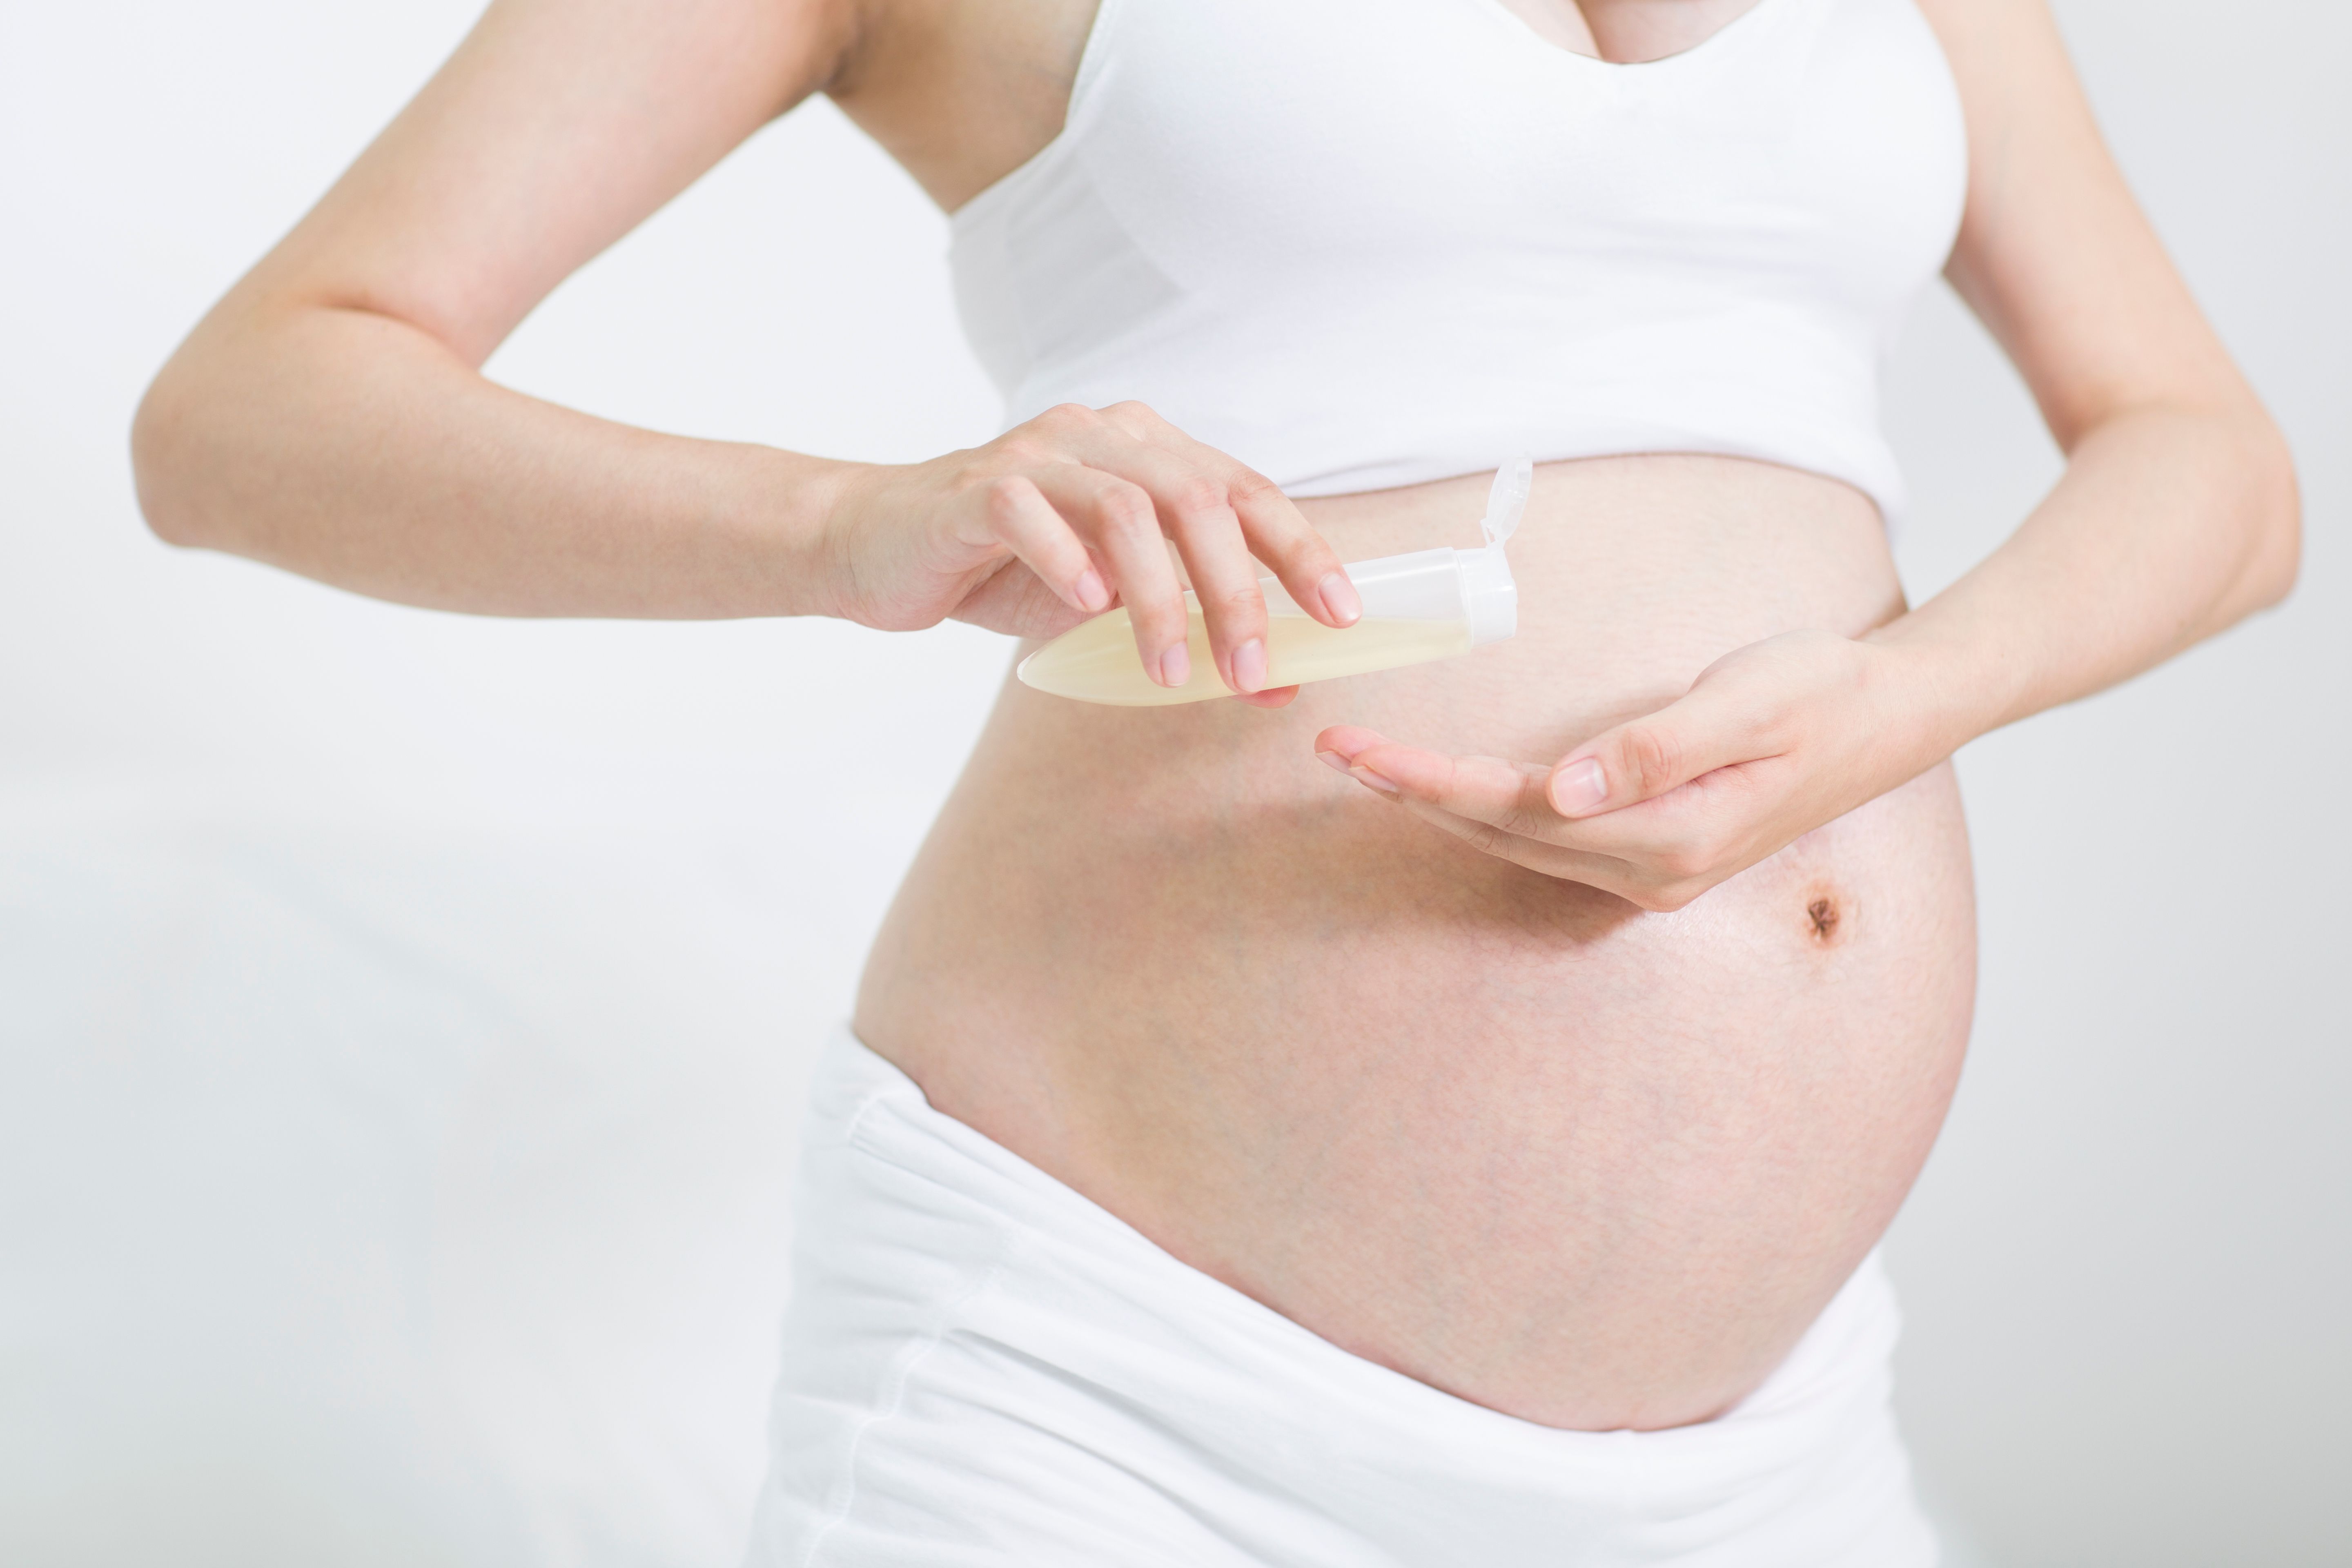 Vergetures grossesse - Traitements et soins anti-vergetures enceinte -  Doctissimo